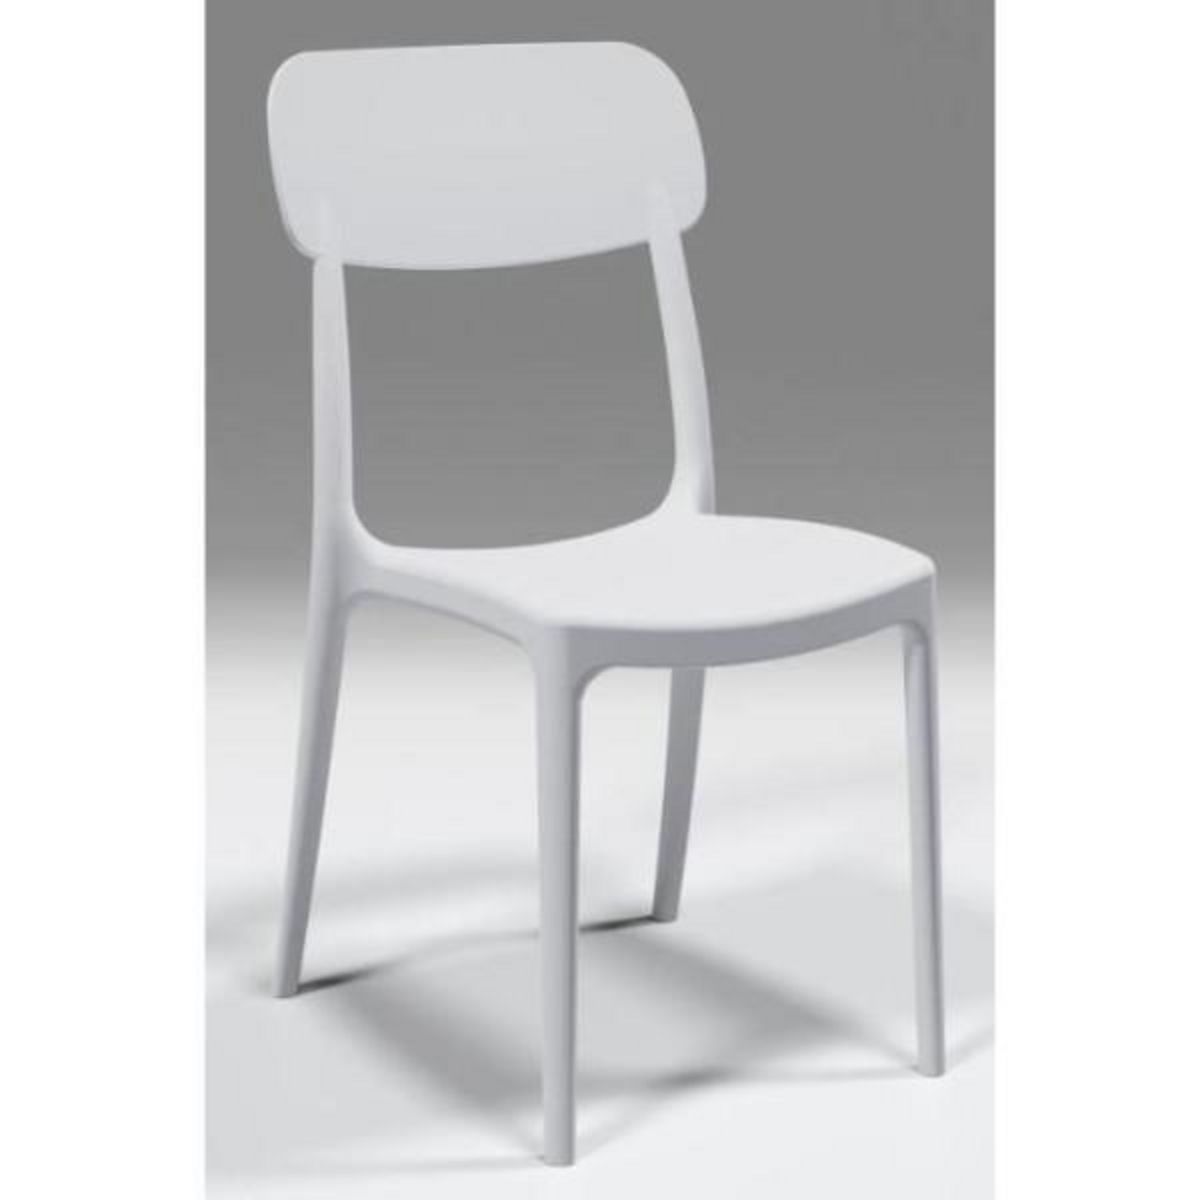 MARKET24 Lot de 4 chaises de jardin CALIPSO ARETA - 53 x 46 x H 88 cm - Blanc